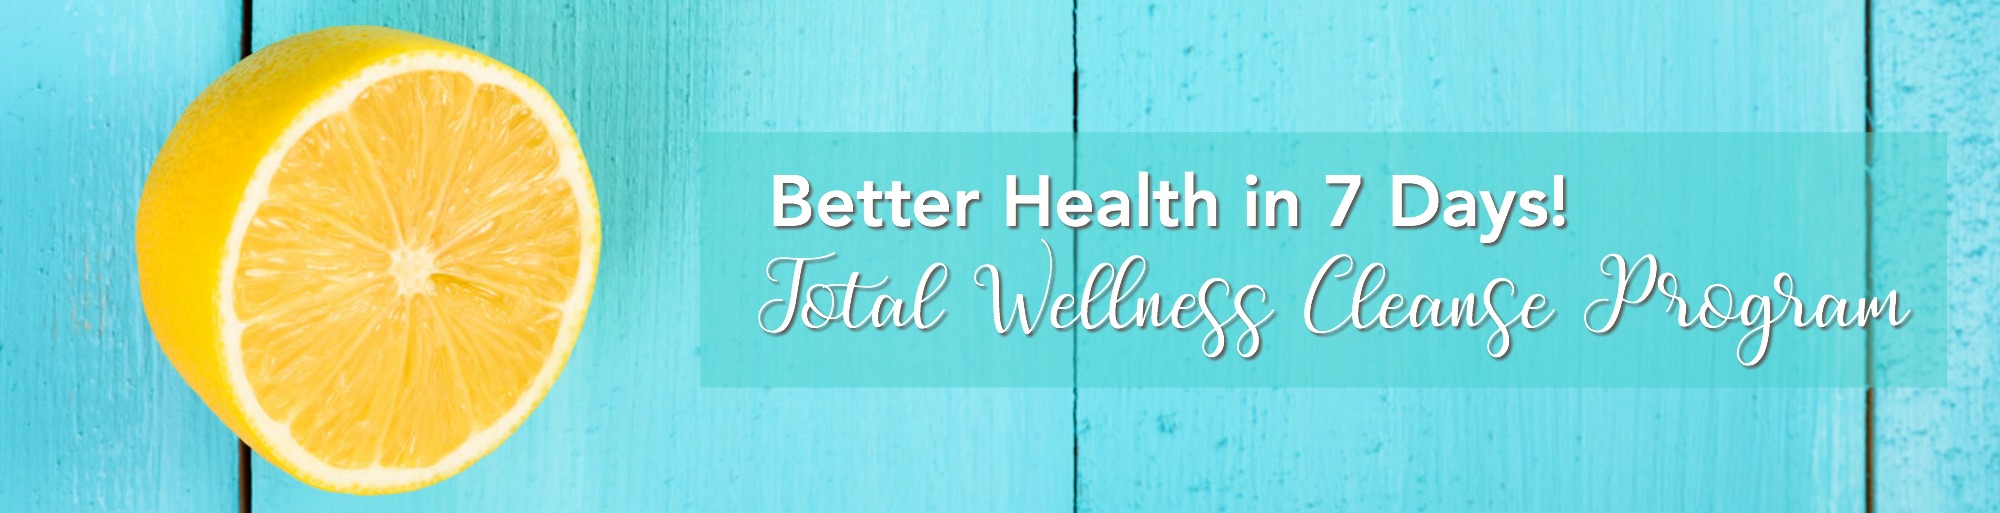 Total wellness cleanse program banner image